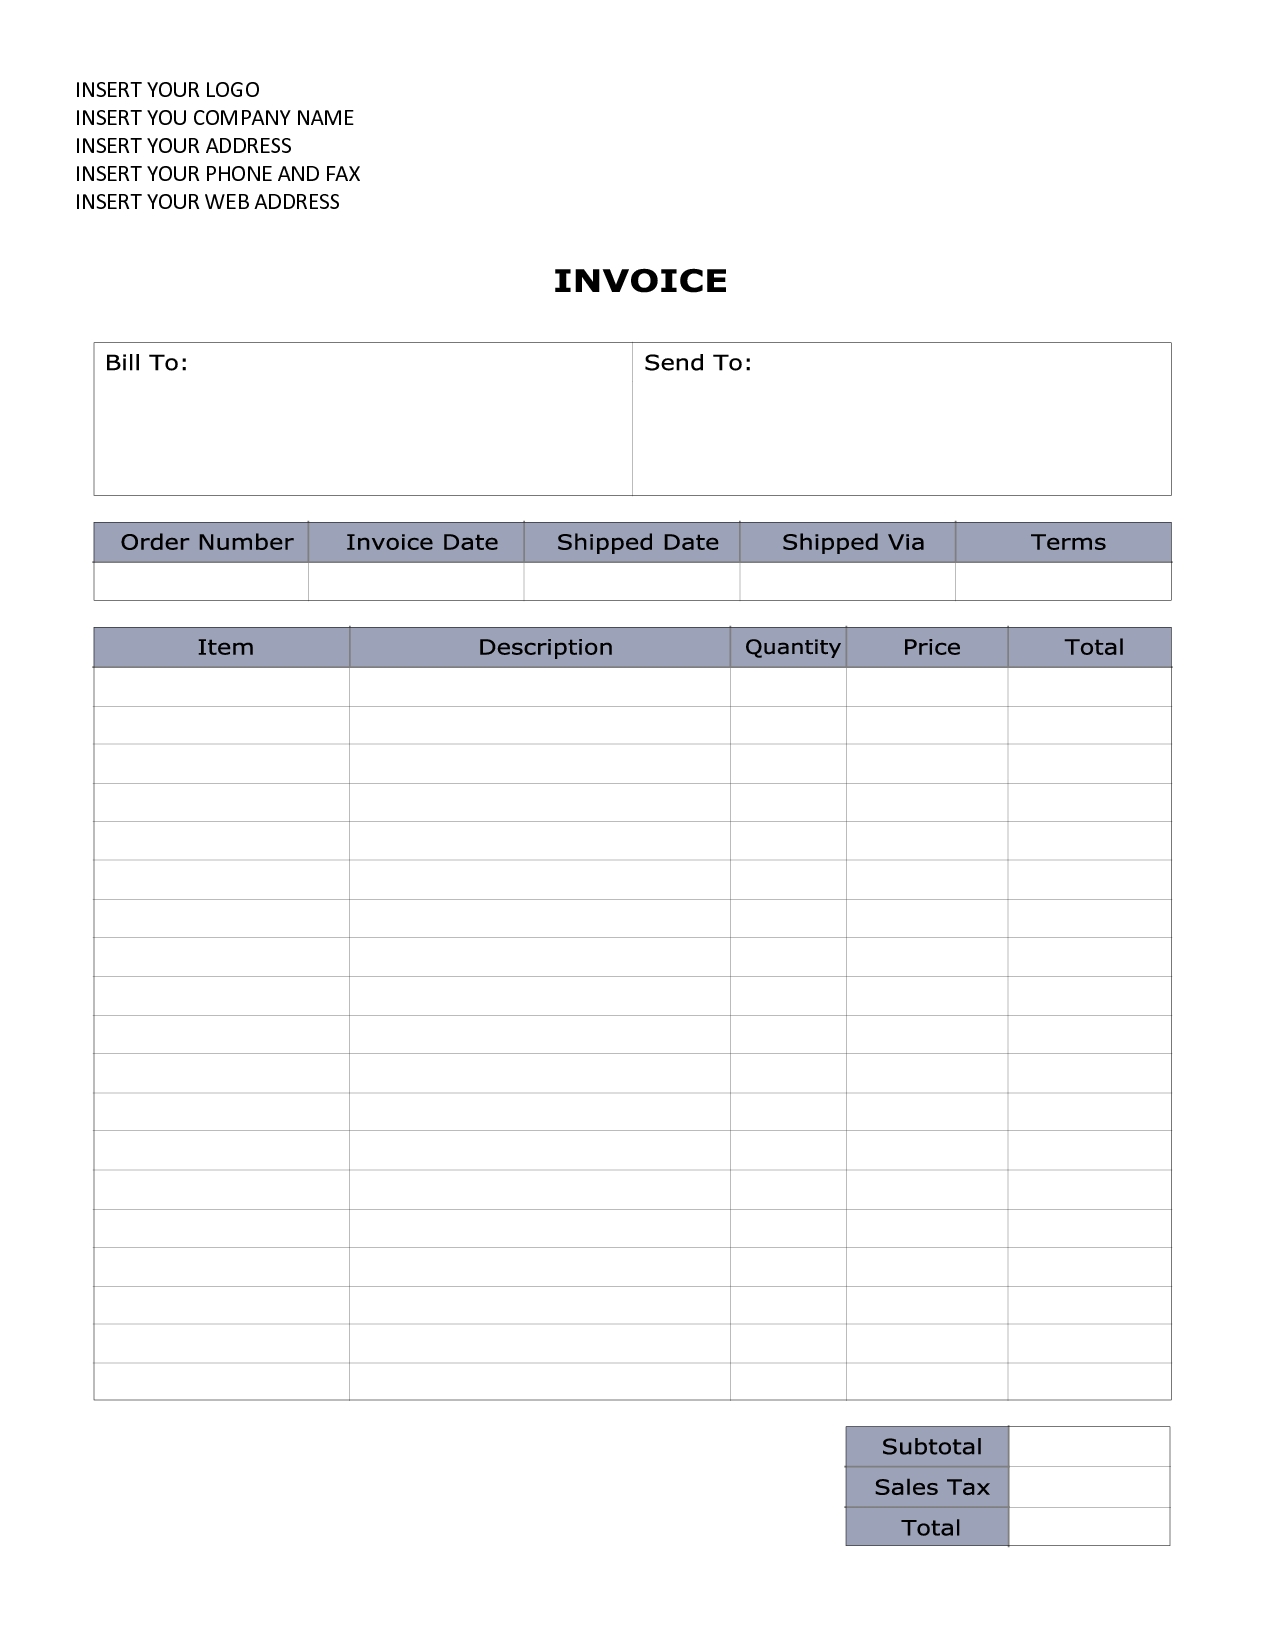 printable invoice template word free printable invoice invoice create an invoice in word